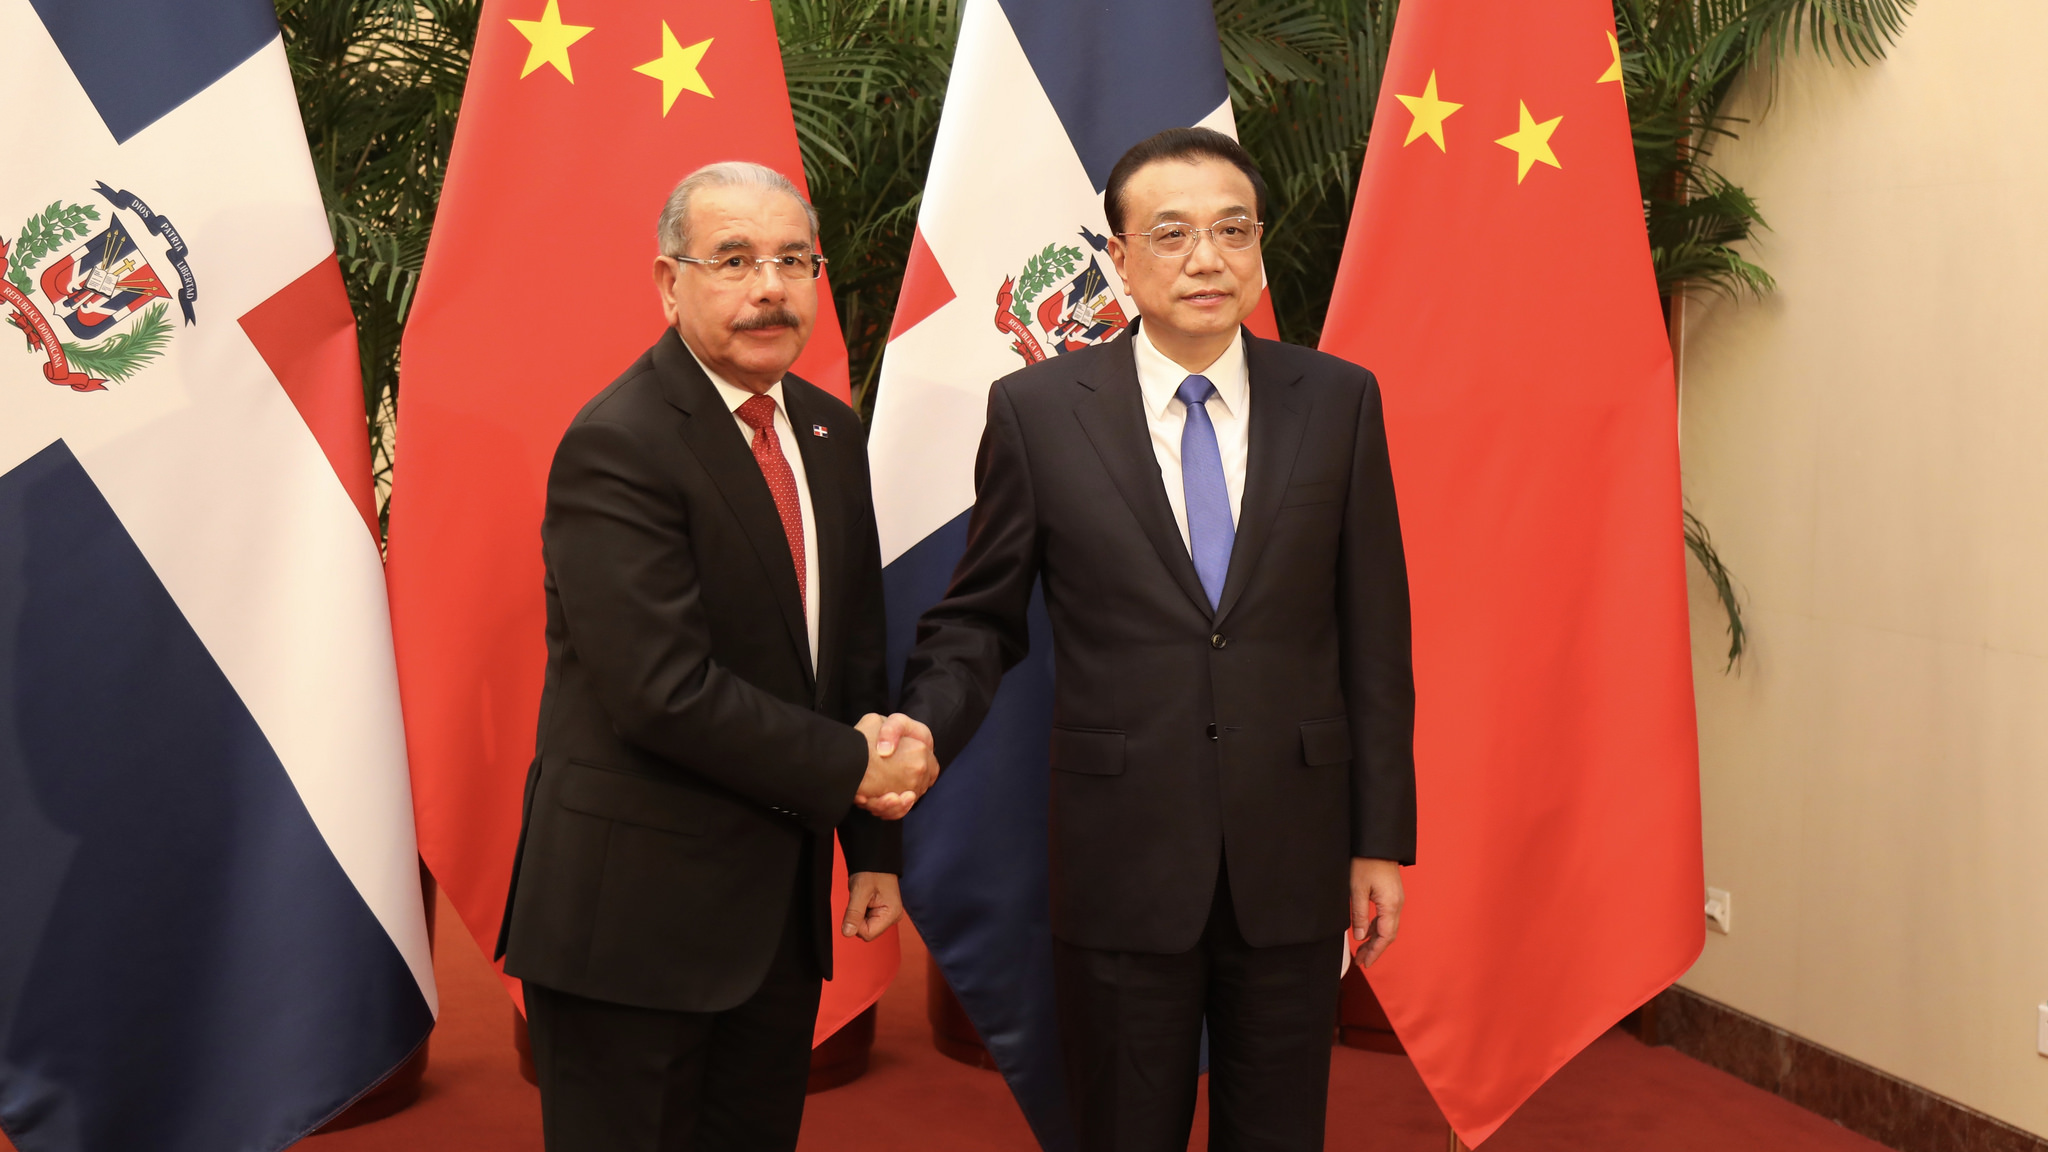 REPÚBLICA DOMINICANA: Danilo Medina se reúne con primer ministro de la República Popular China, Li Keqiang